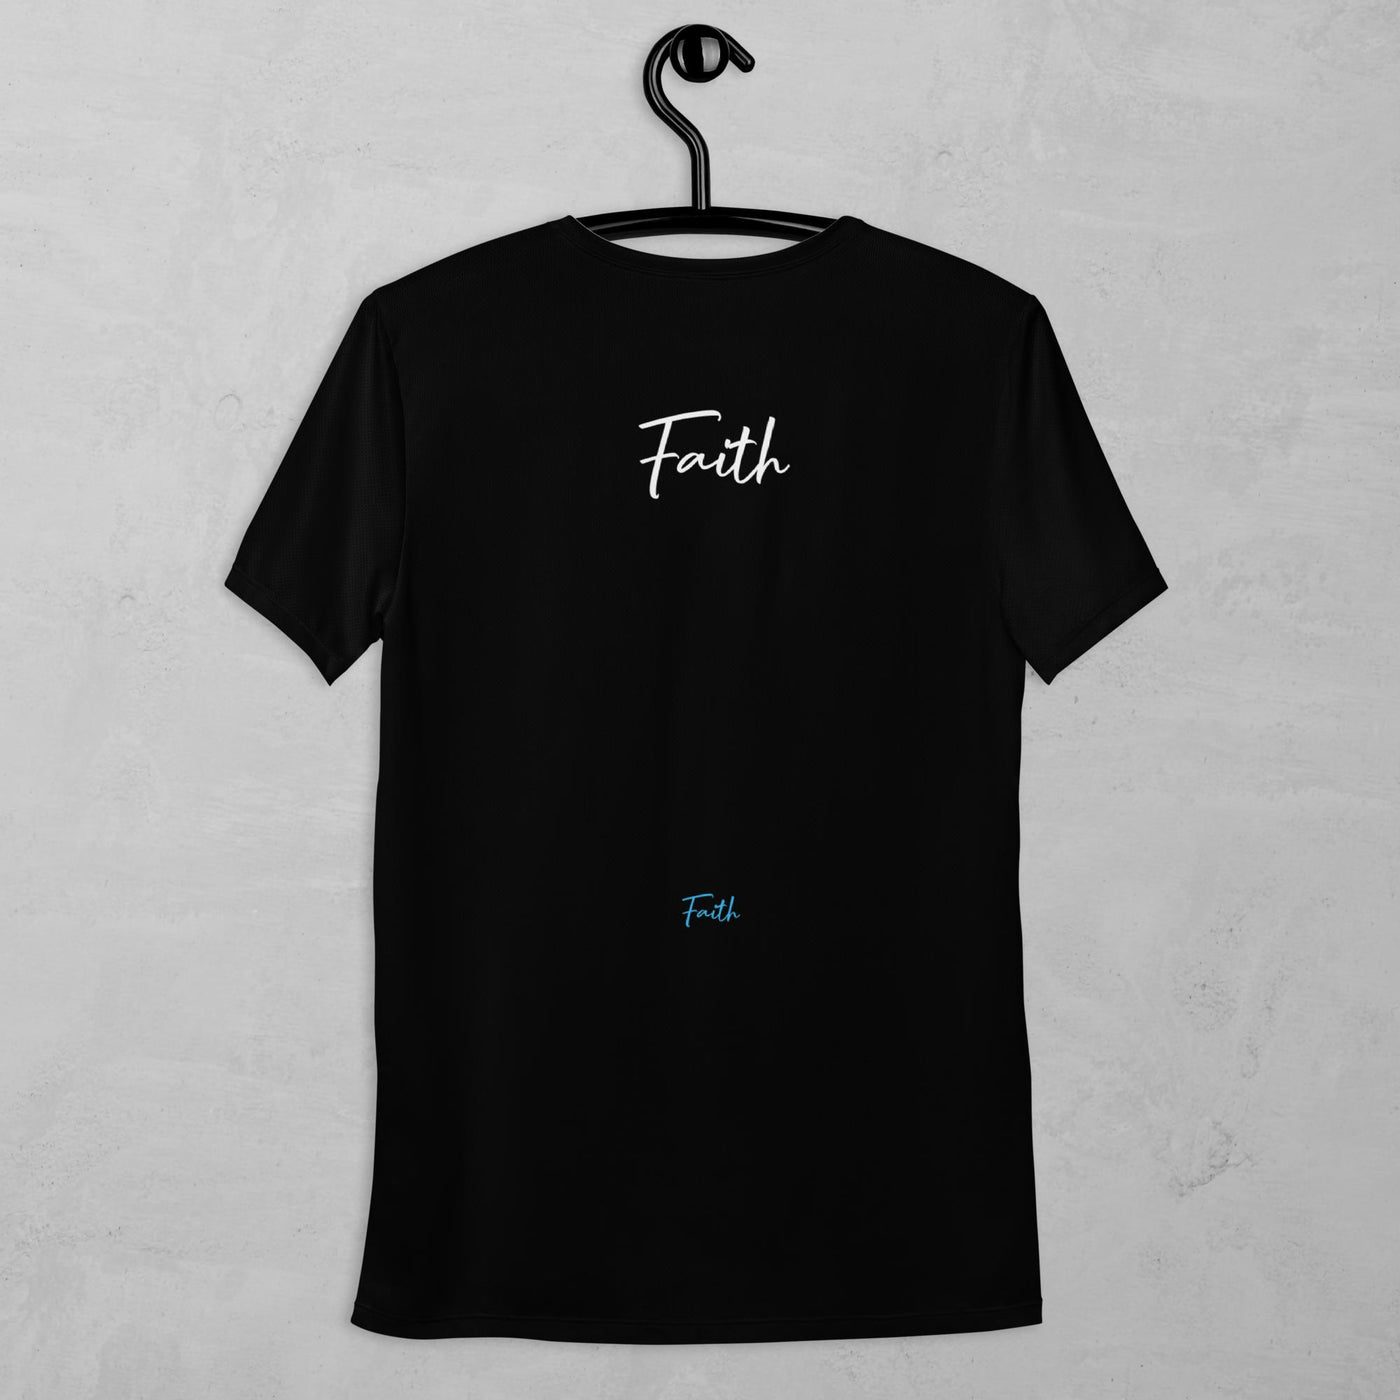 J.A Faith Men's Athletic T-shirt